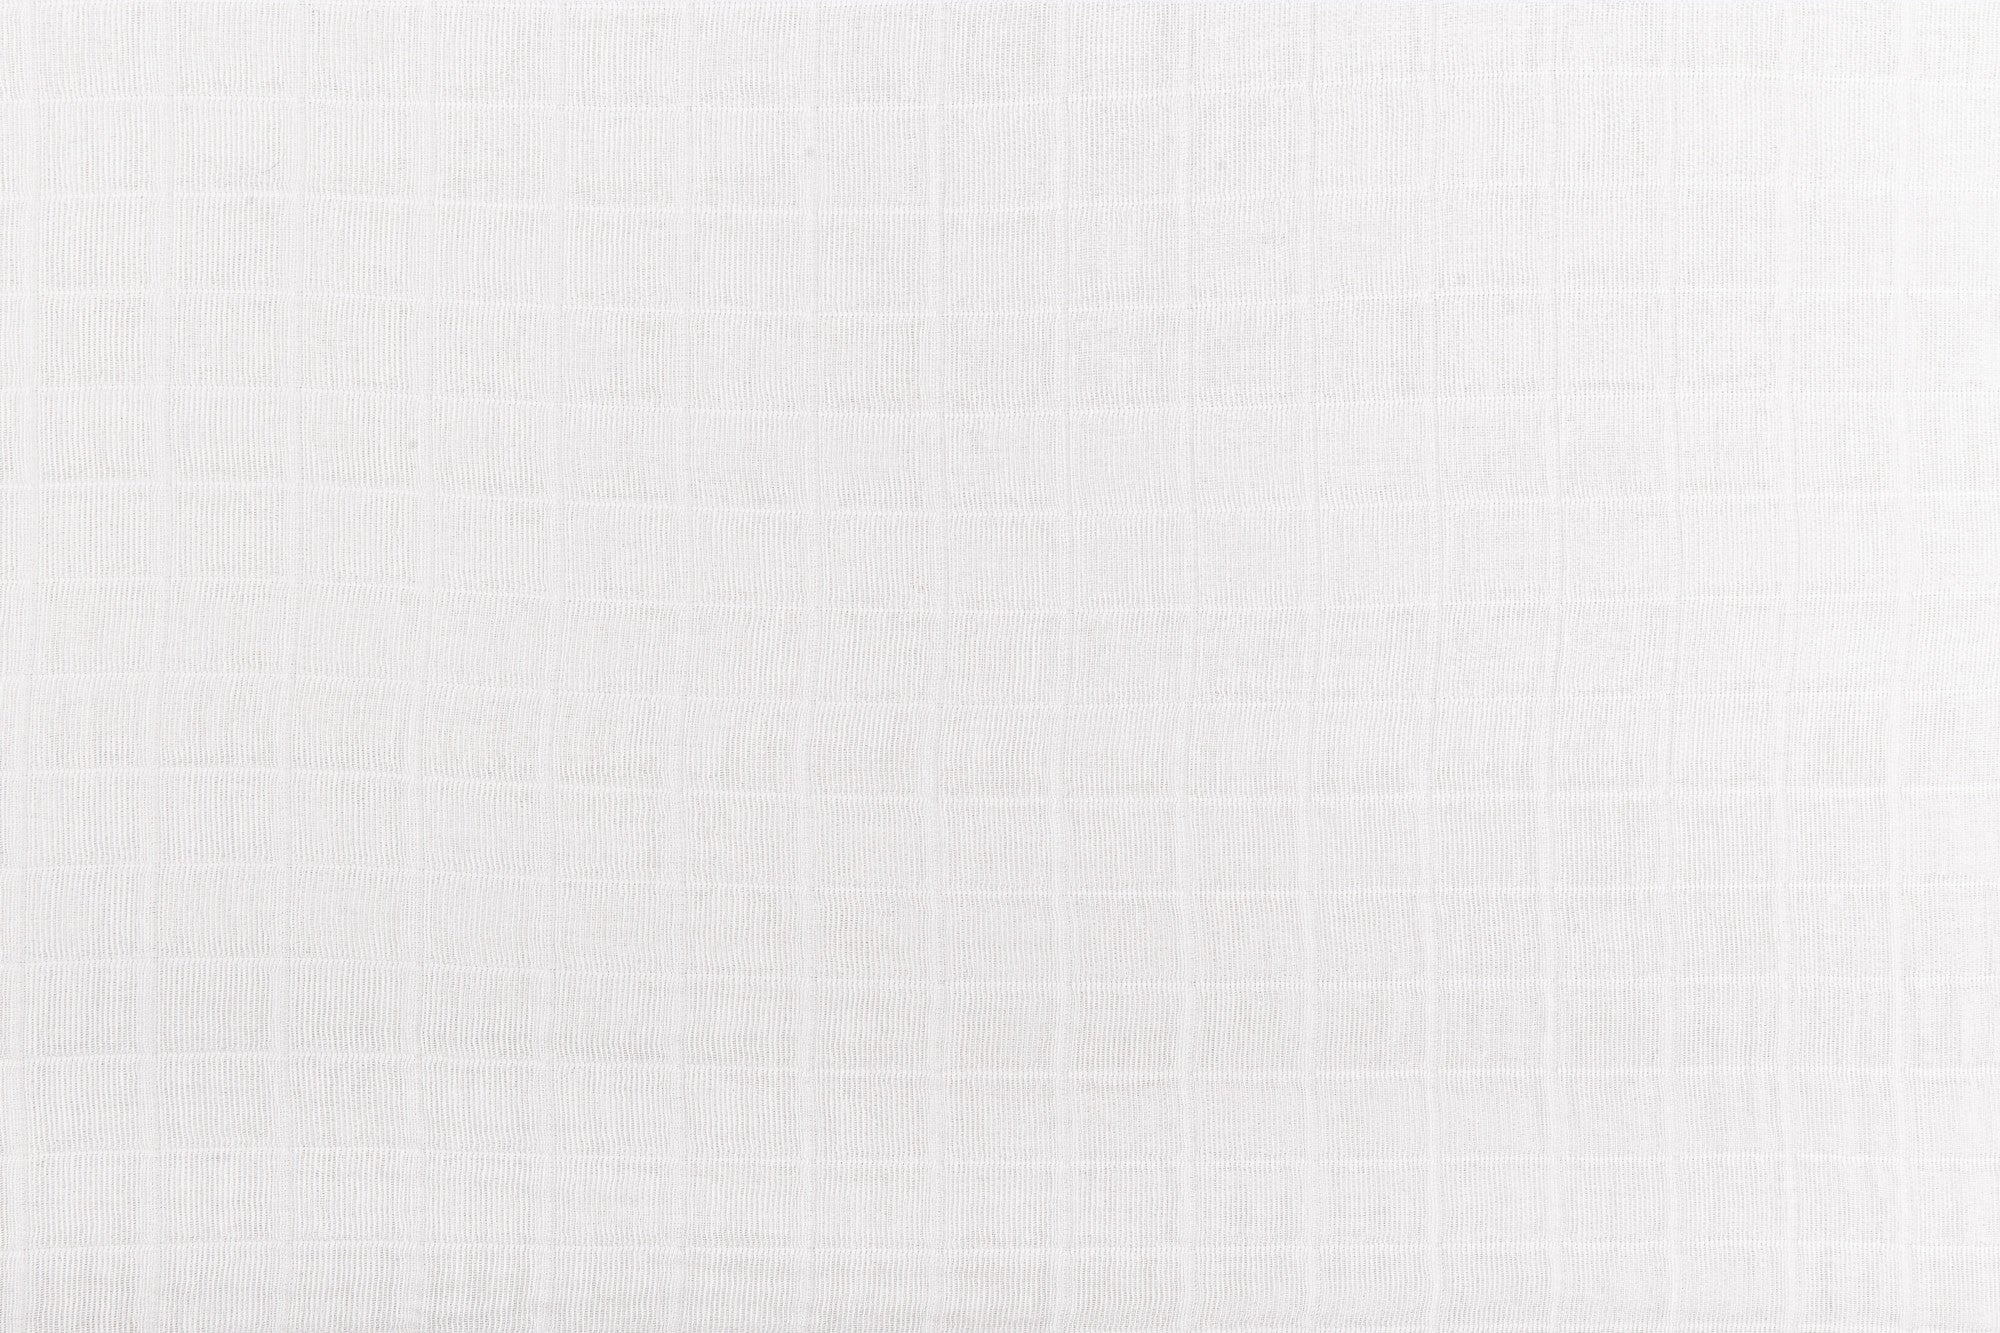 Babyletto Plain White Muslin Mini Crib Sheet in GOTS Certified Organic Cotton